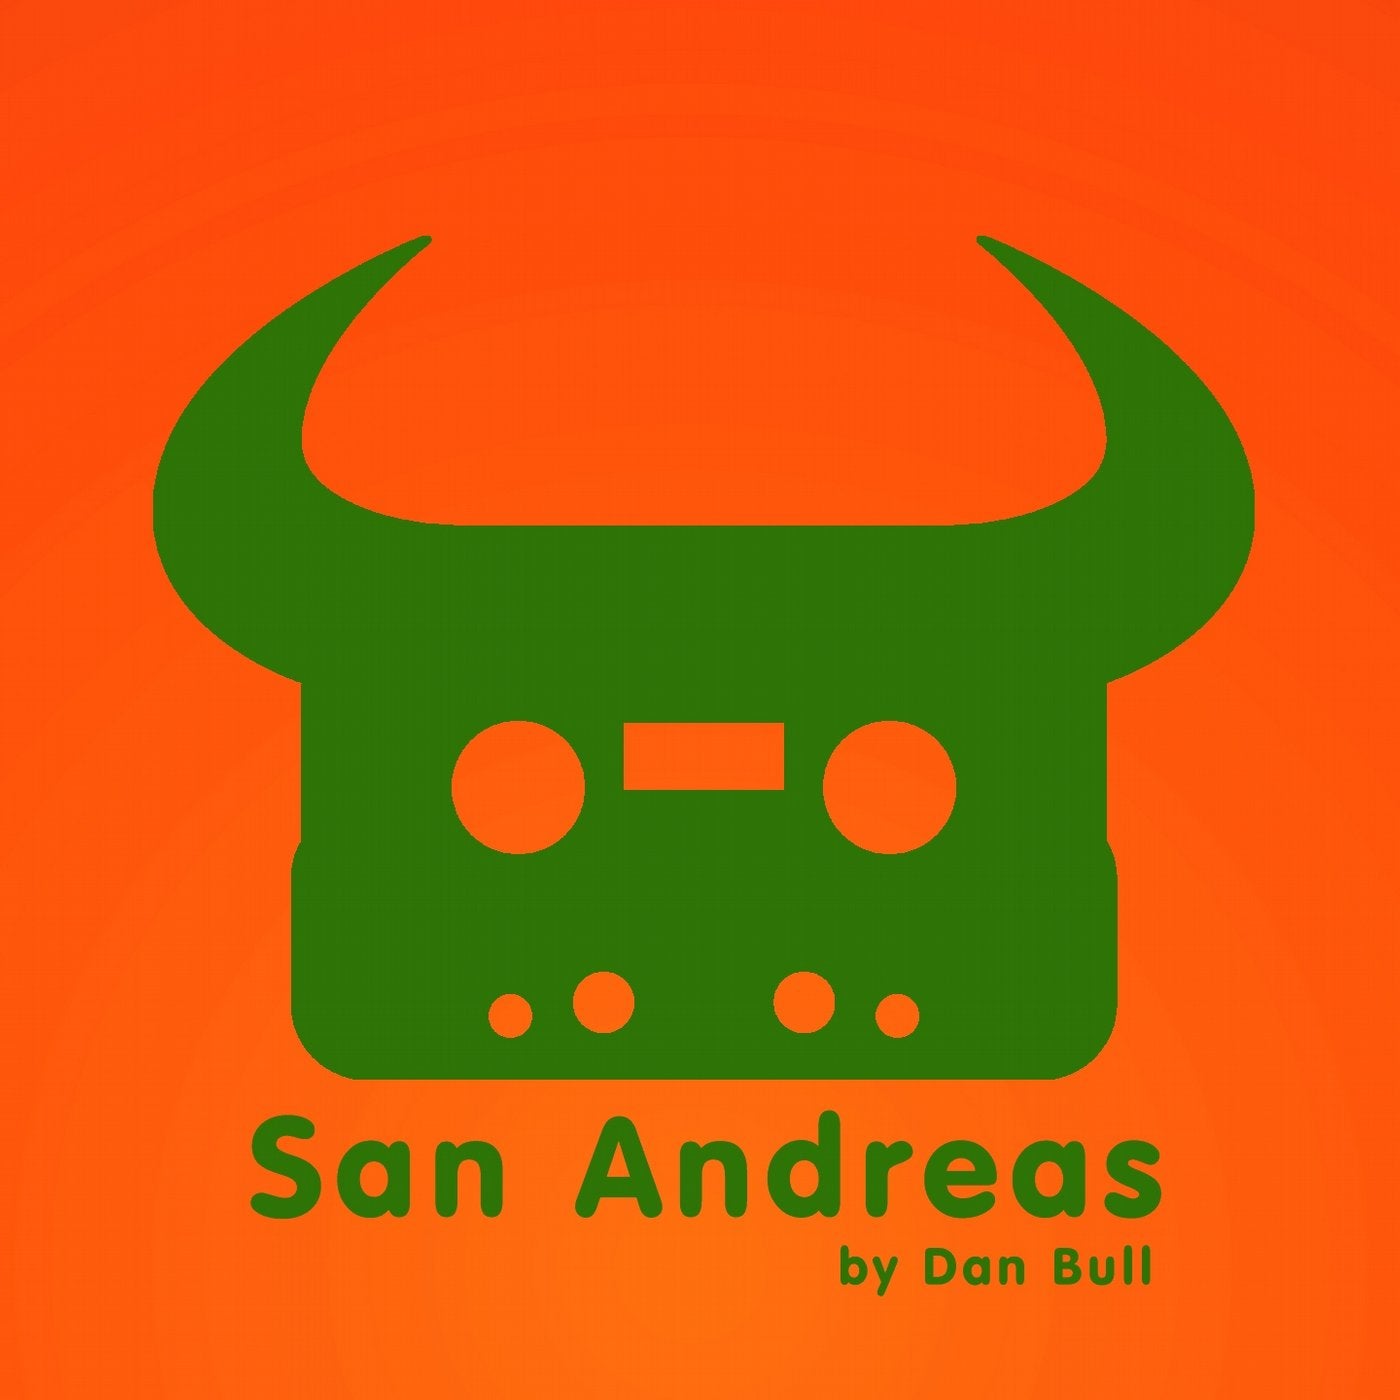 San Andreas (GTA San Andreas Rap)